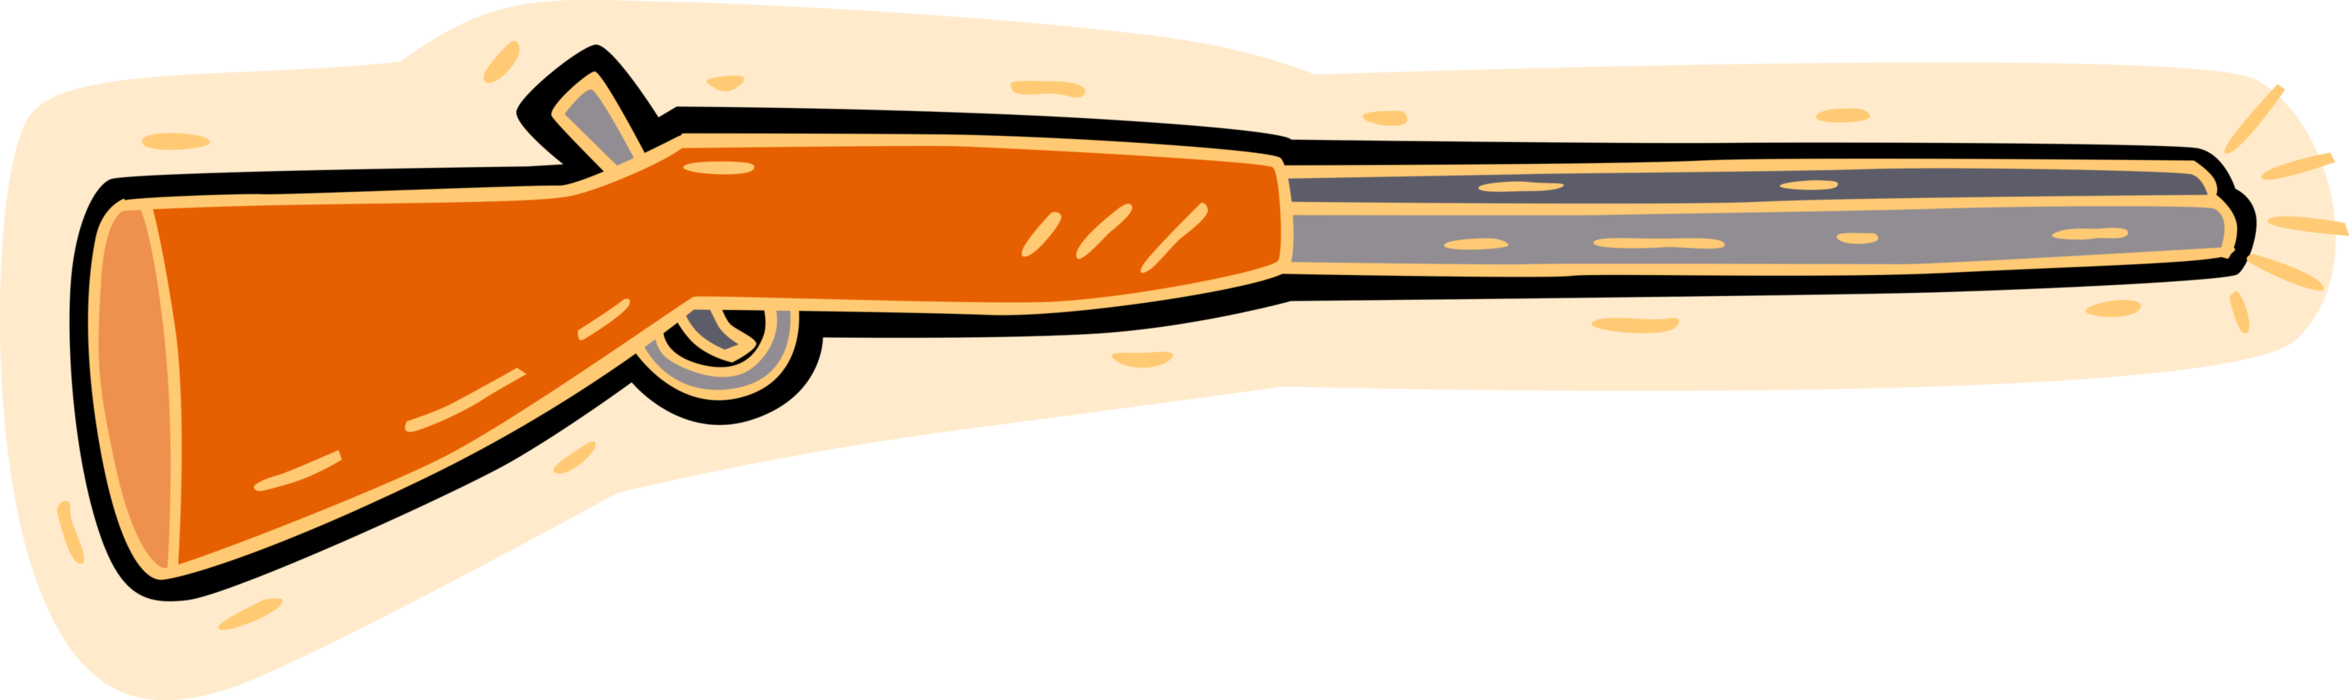 Vector Illustration of Rifle Long Gun Weapon